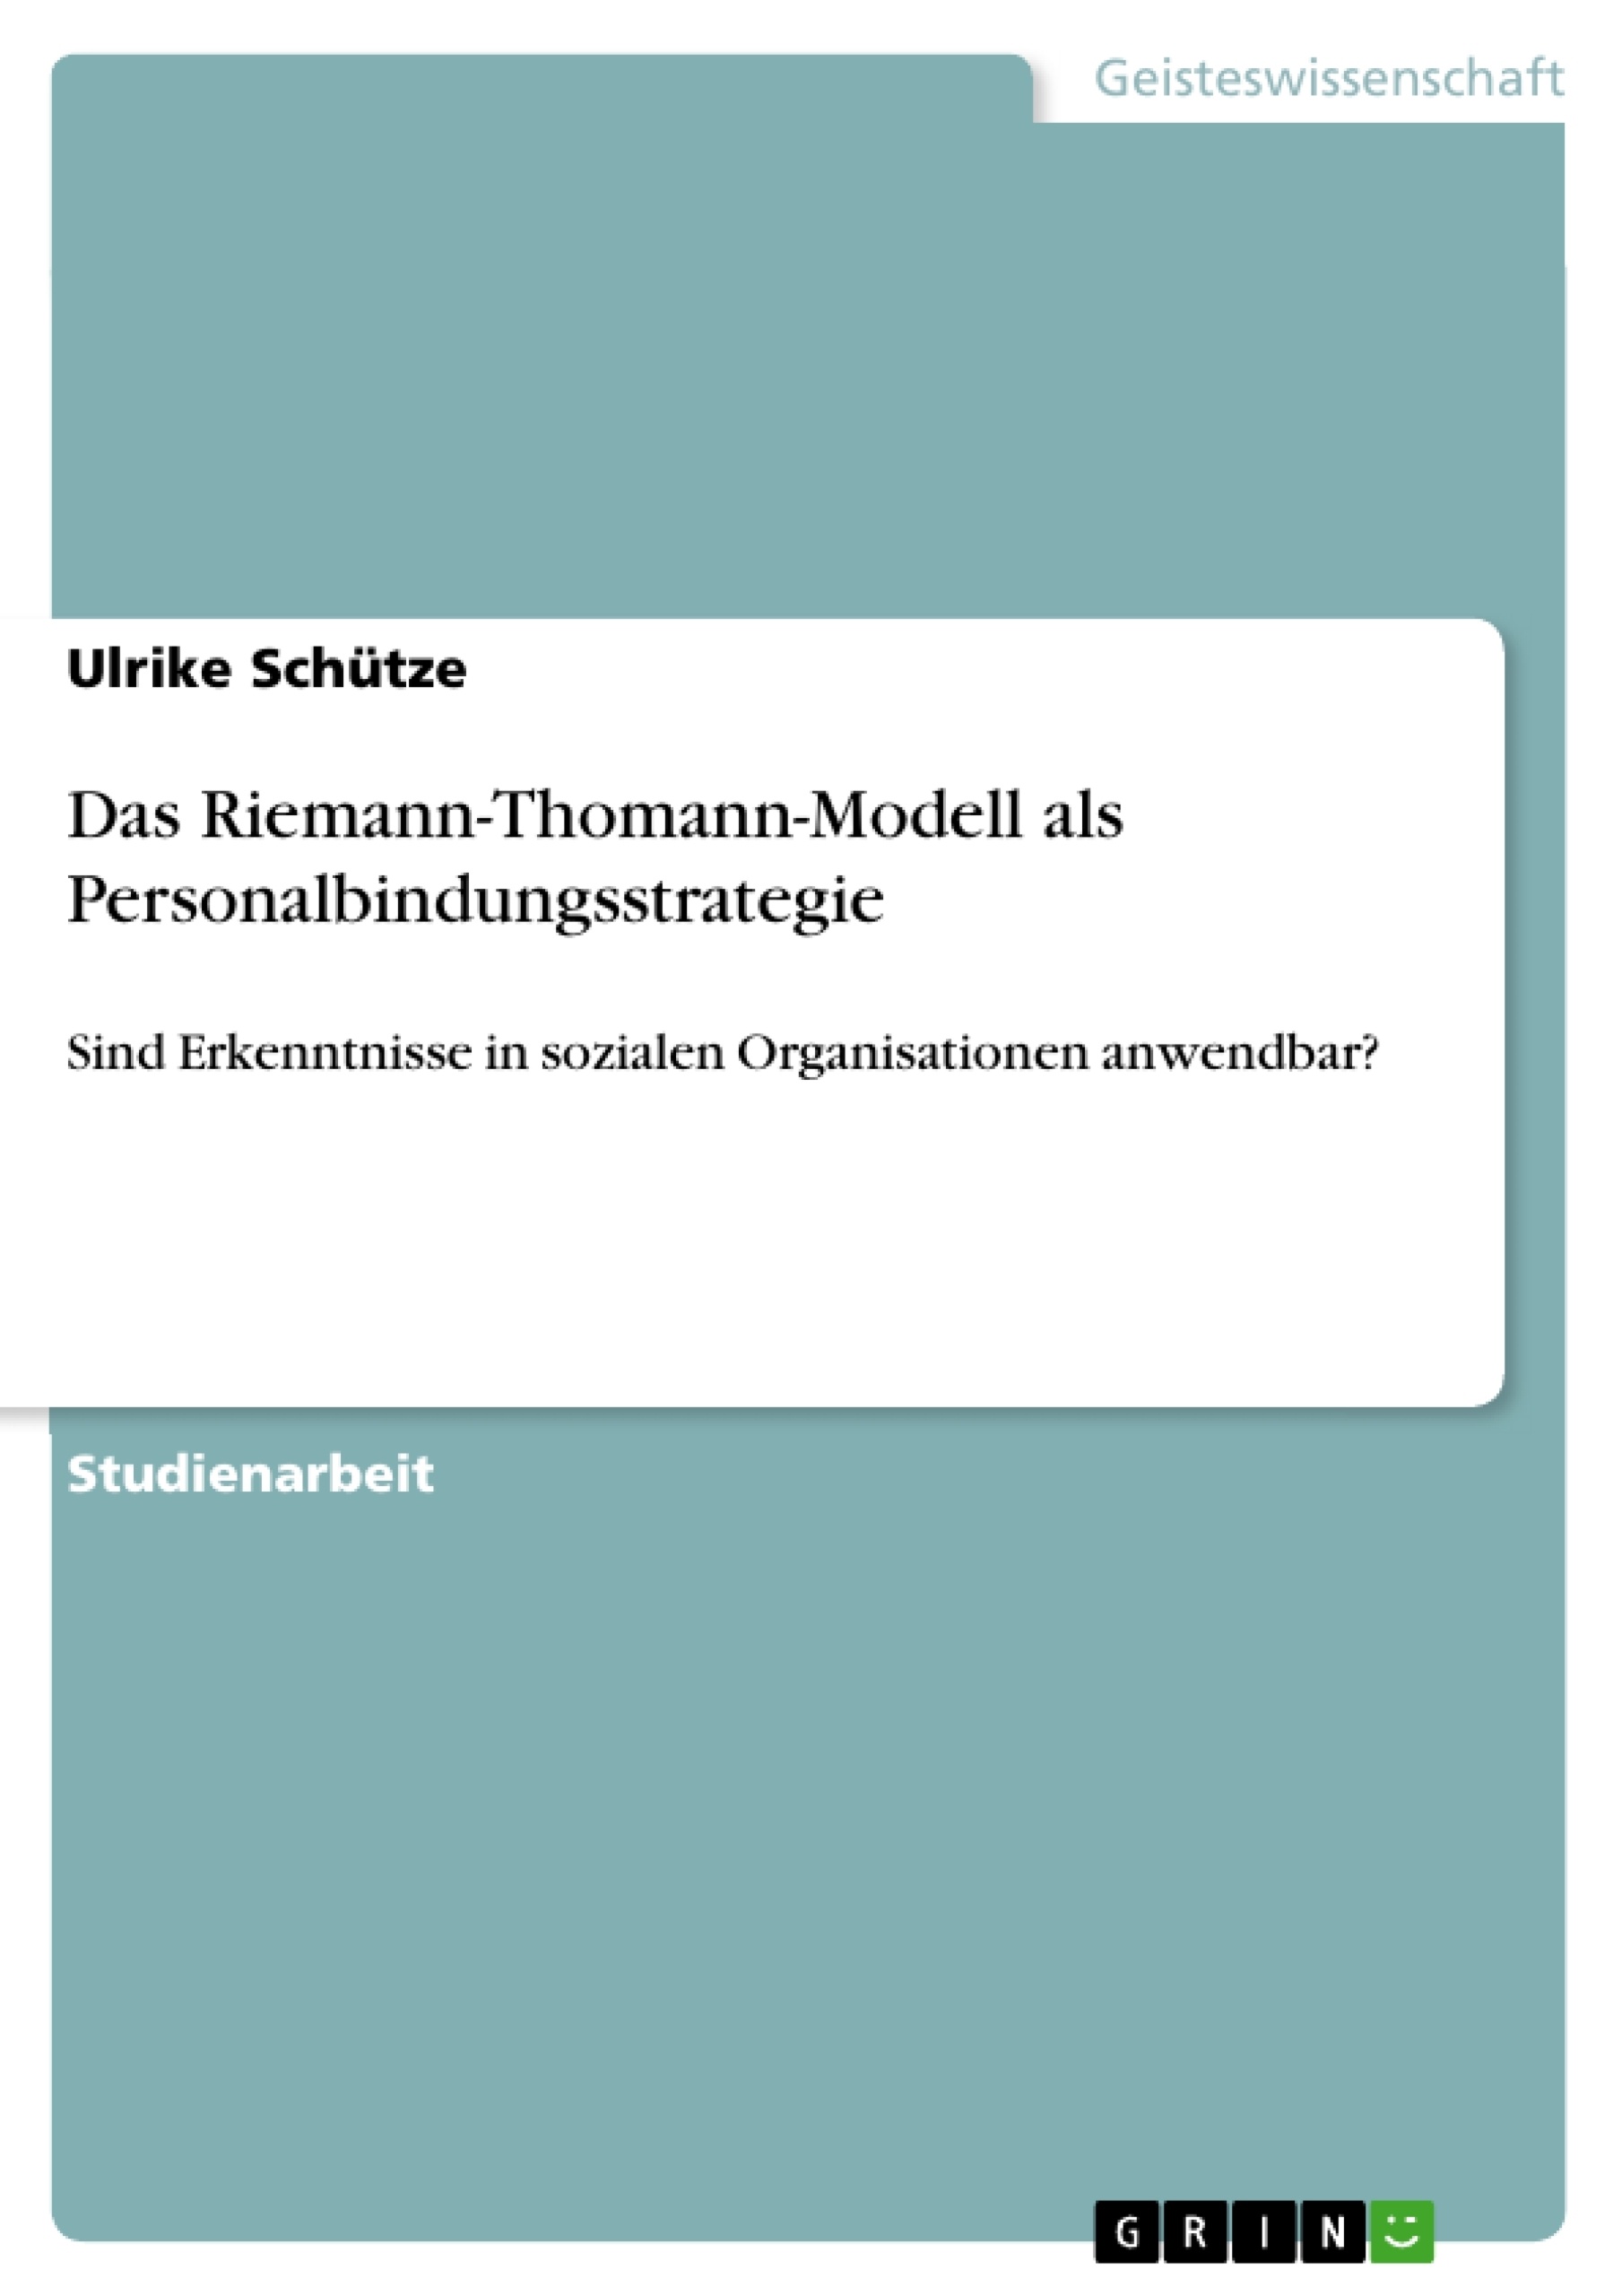 Title: Das Riemann-Thomann-Modell als Personalbindungsstrategie